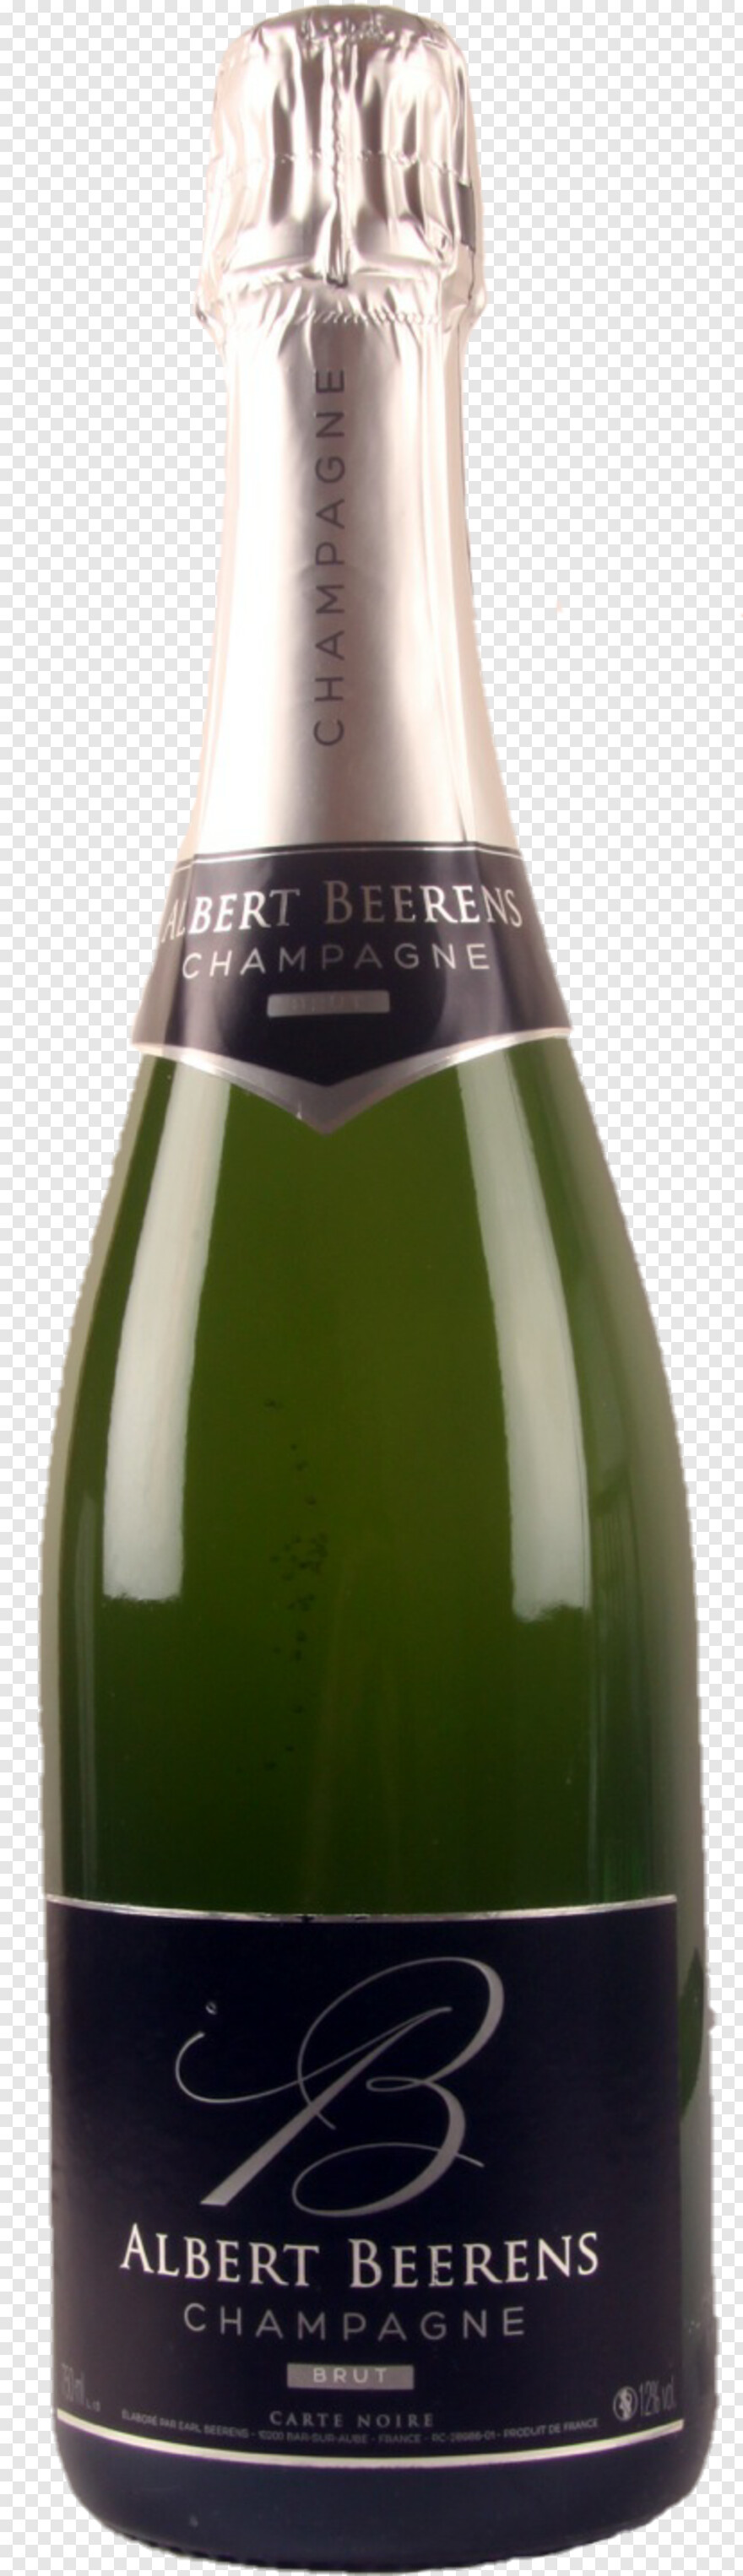 champagne # 326460